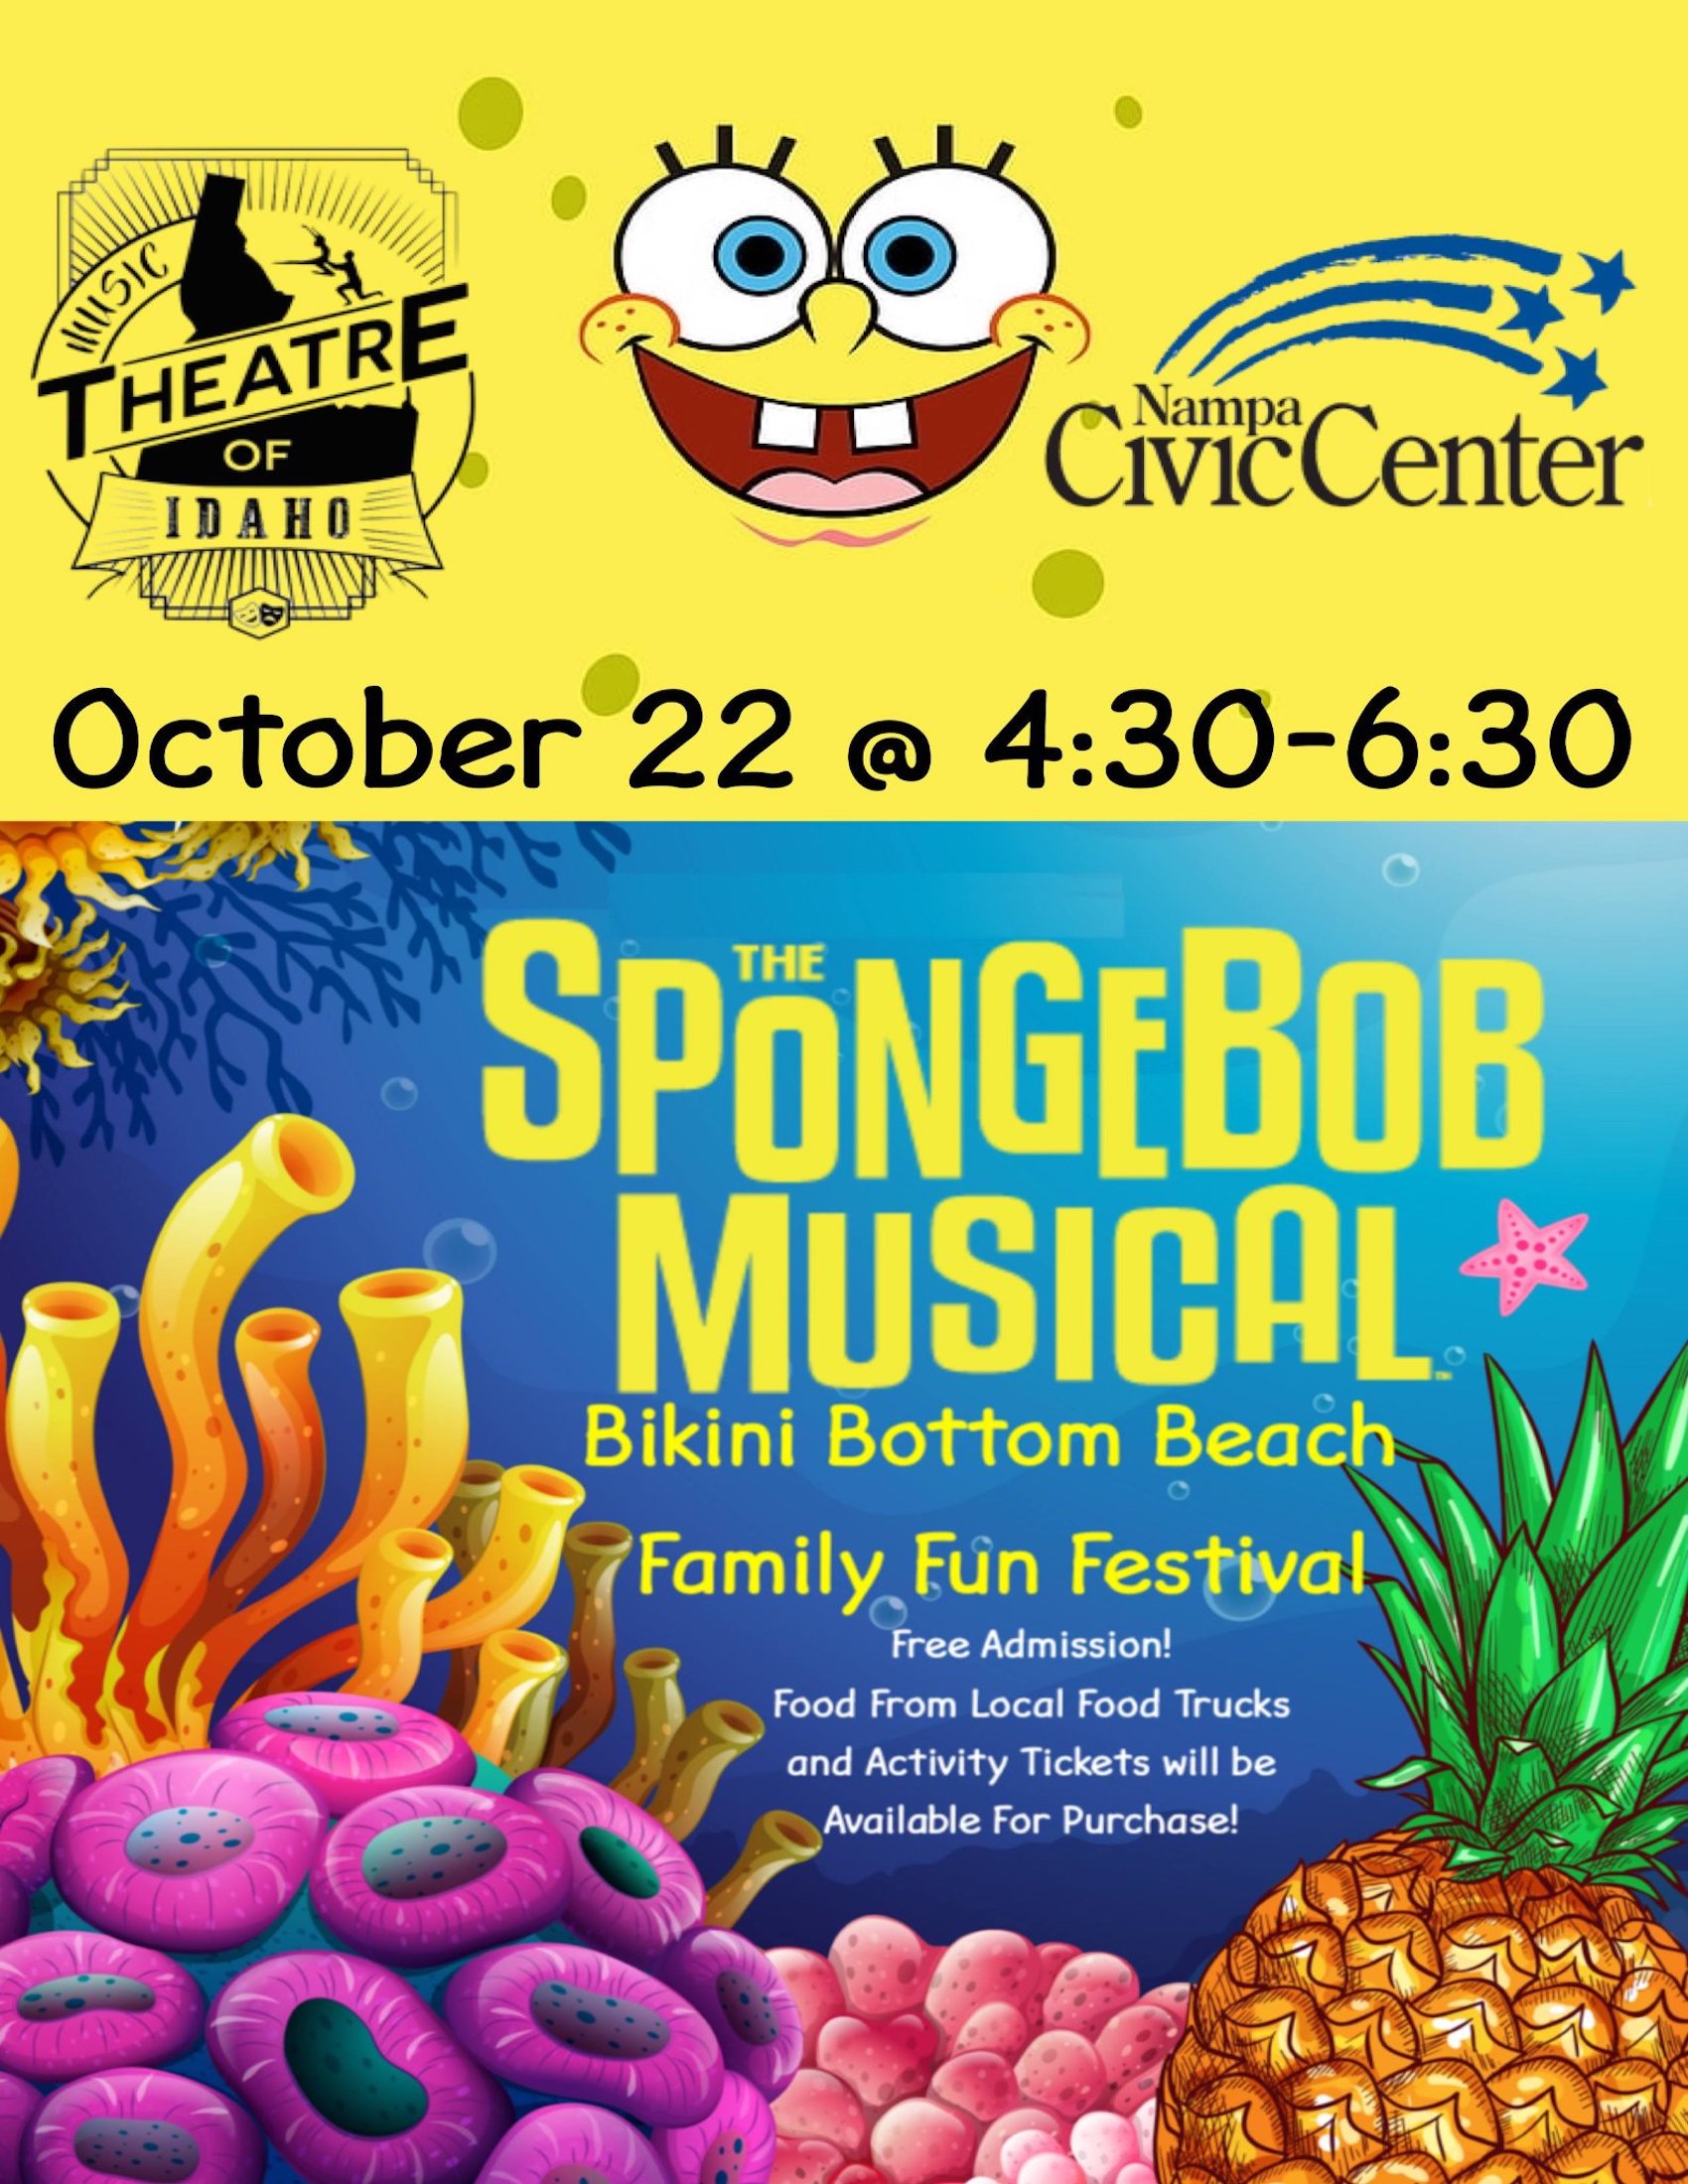 Spongebob the Musical